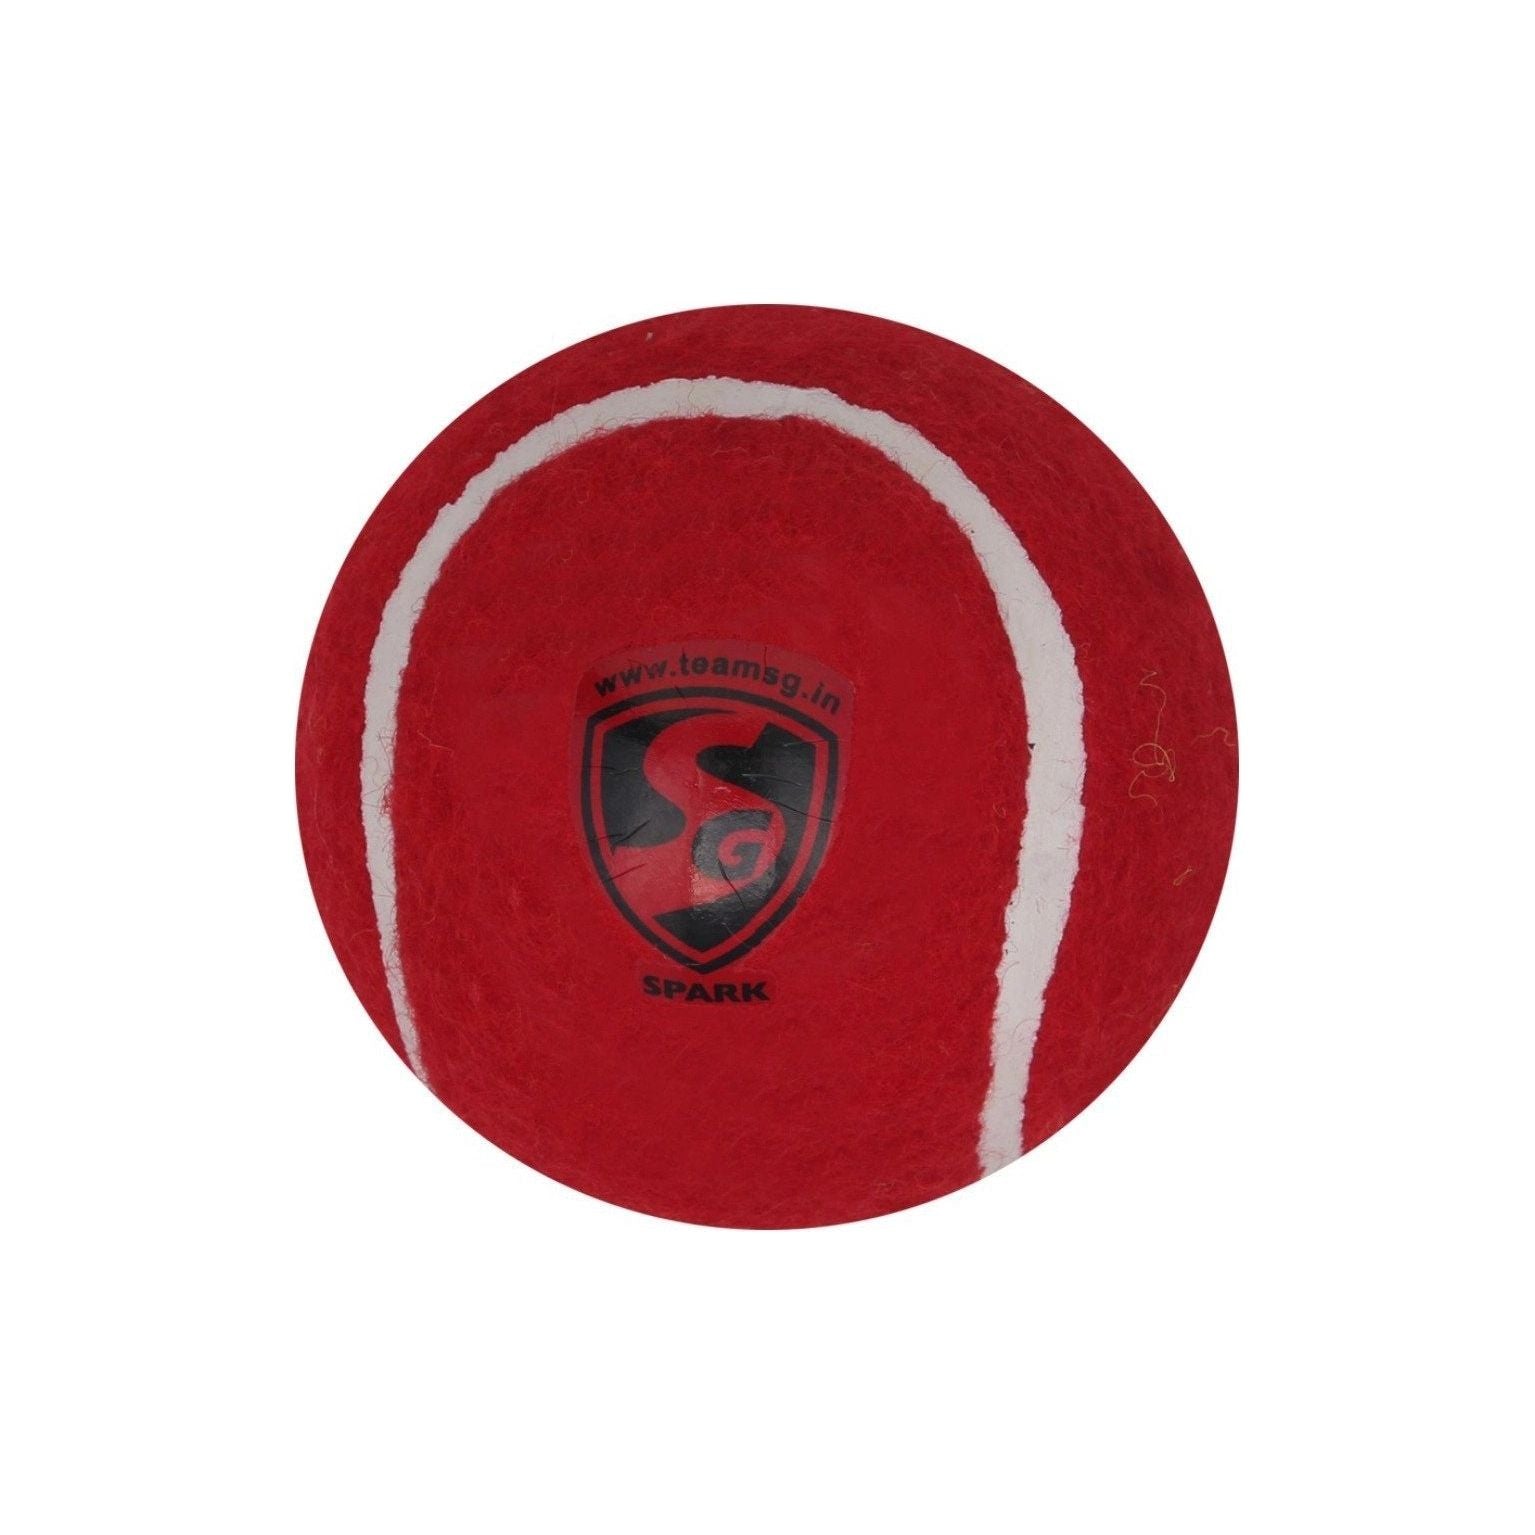 SG Spark Heavy Cricket Tennis Ball (Red)